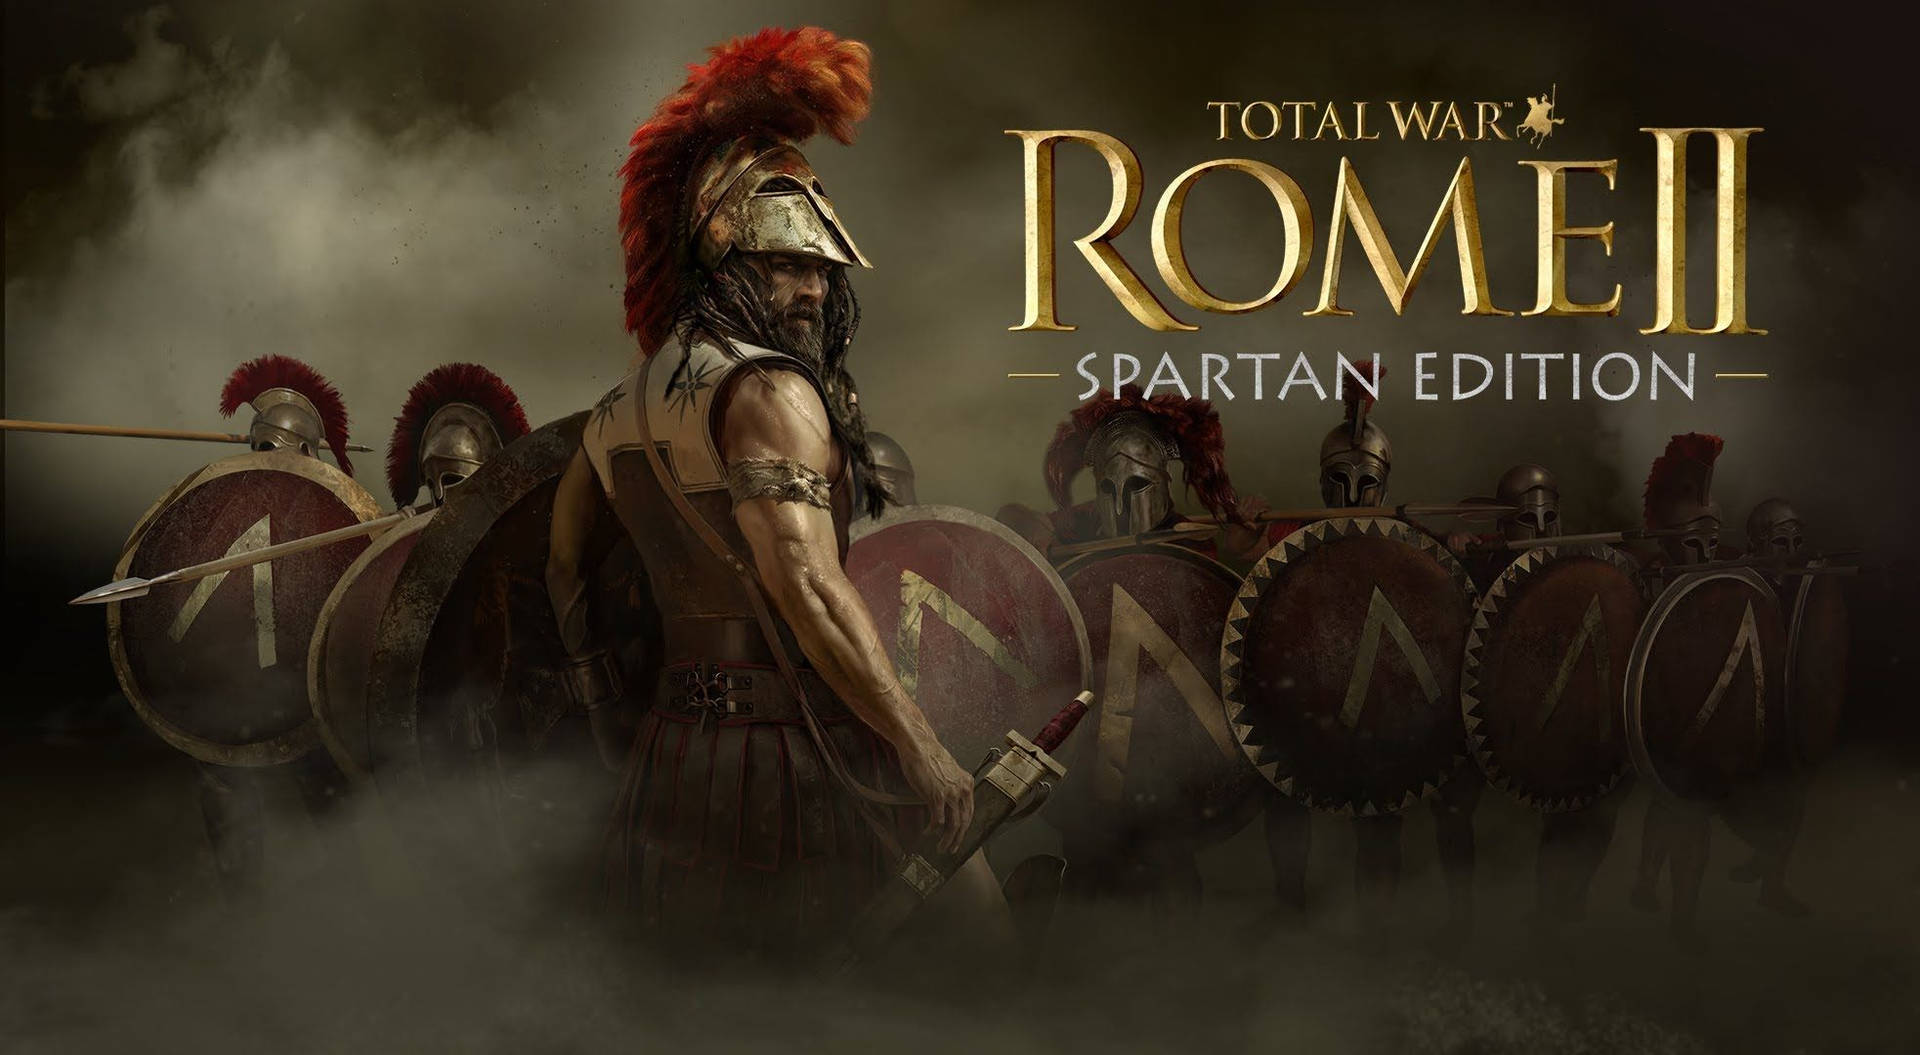 Rome2 Spartan Edition Spiel-cover. Wallpaper